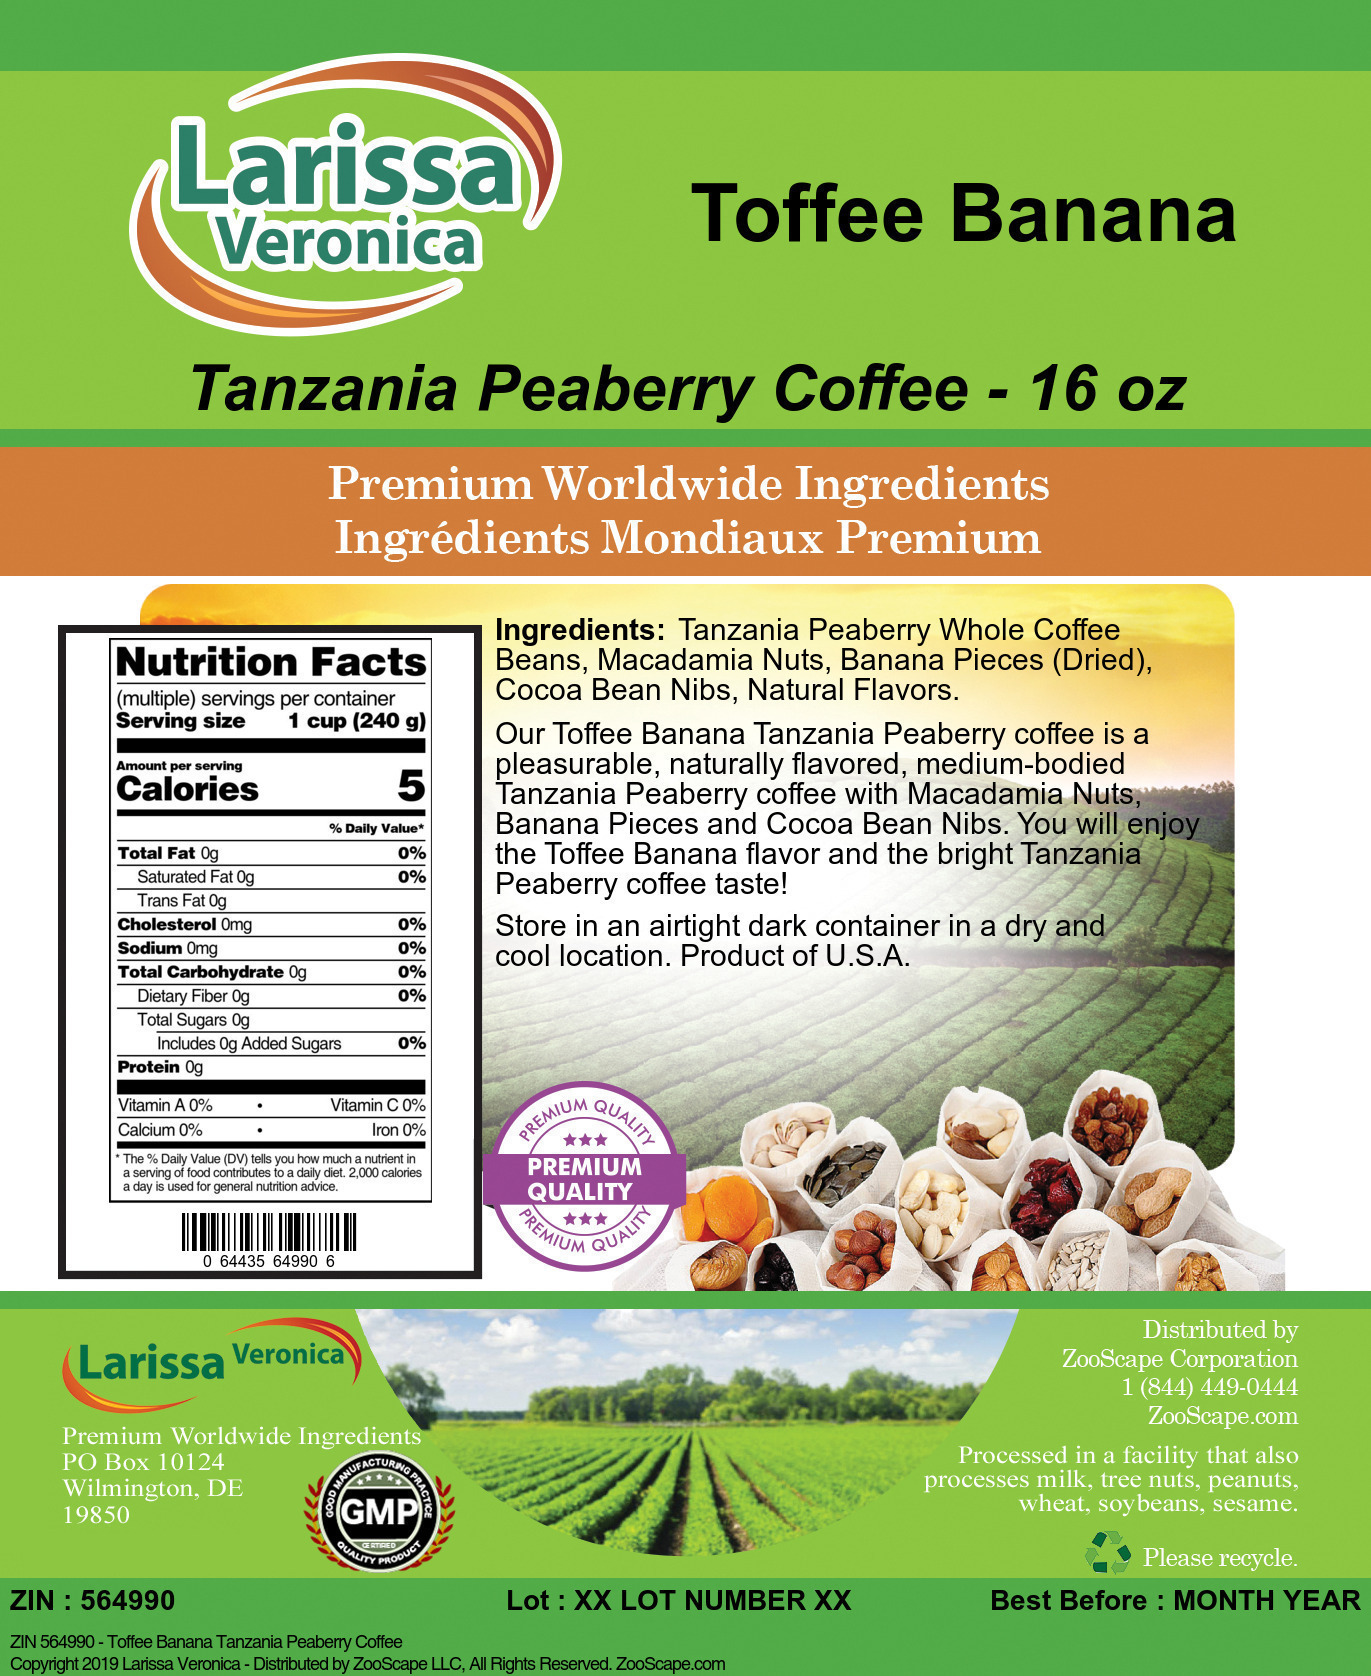 Toffee Banana Tanzania Peaberry Coffee - Label